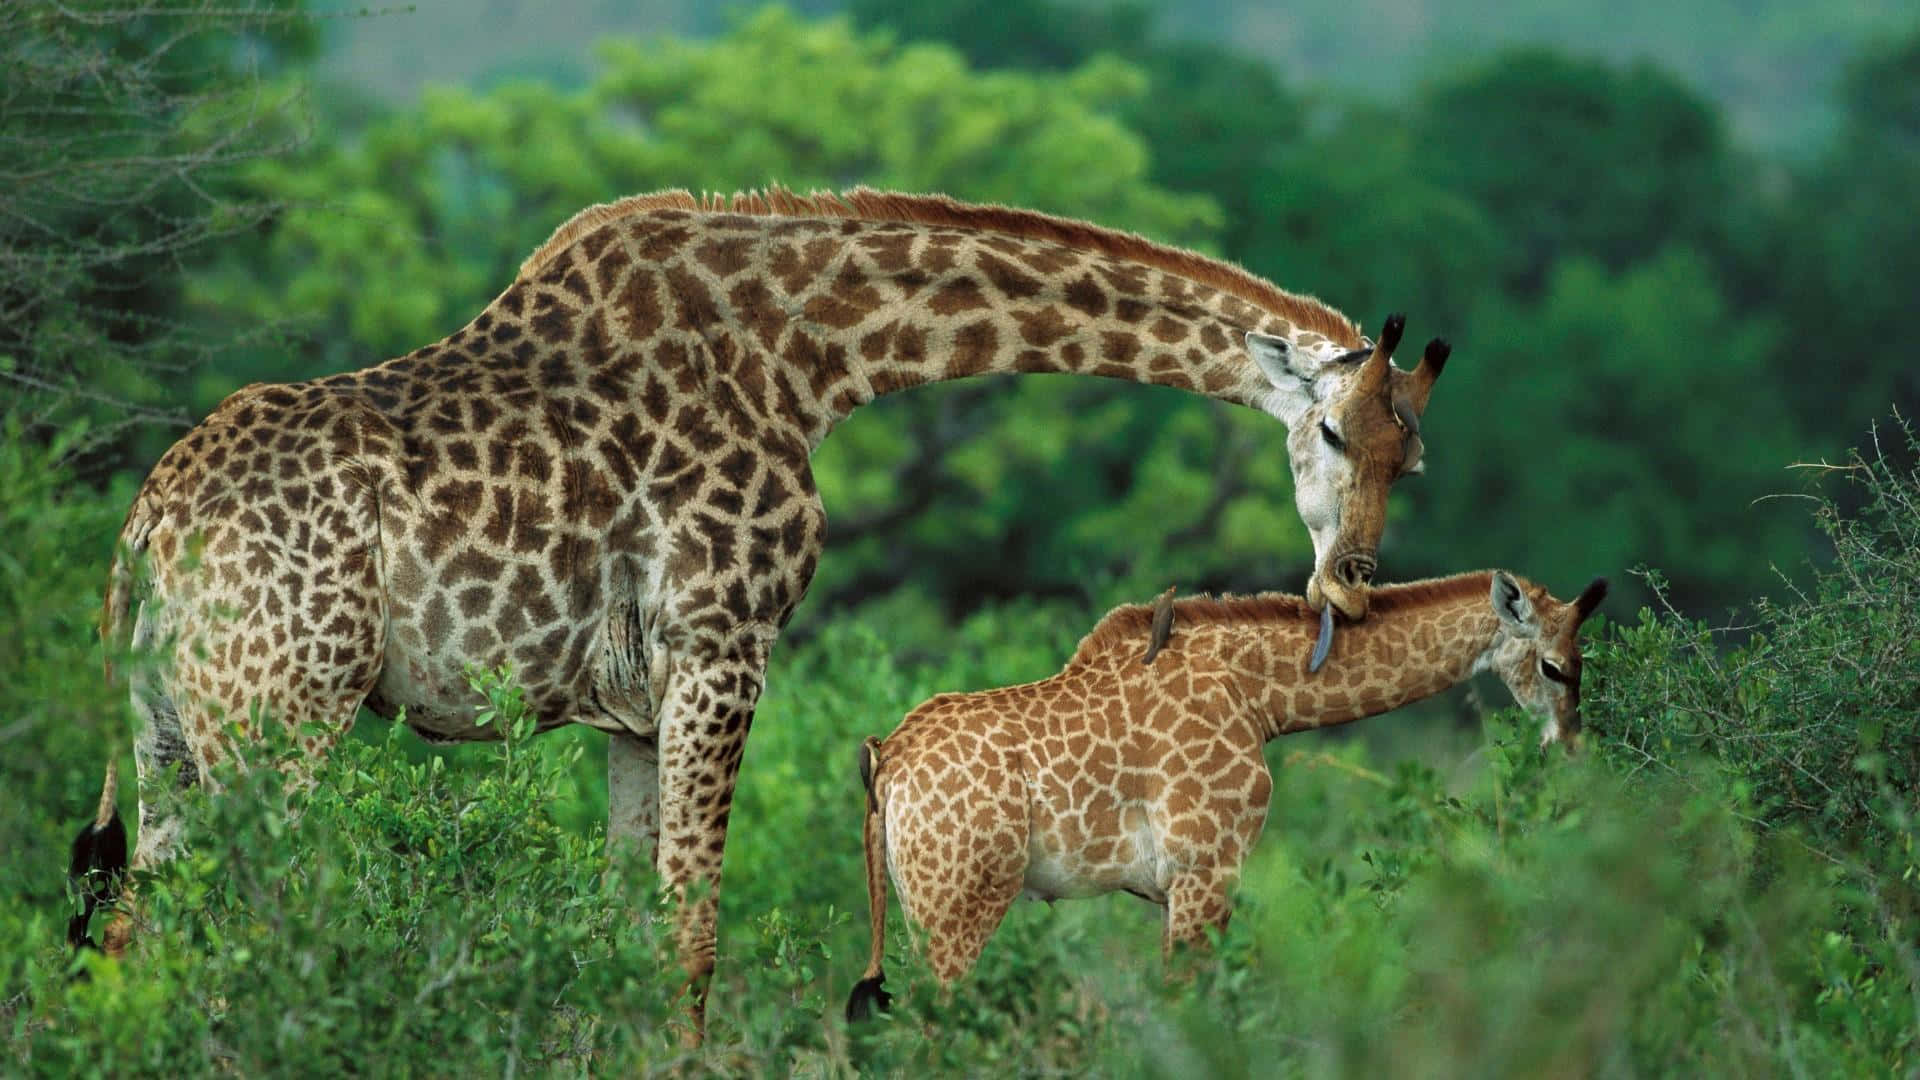 Tiny Baby Giraffe Cuddled Up With Mom